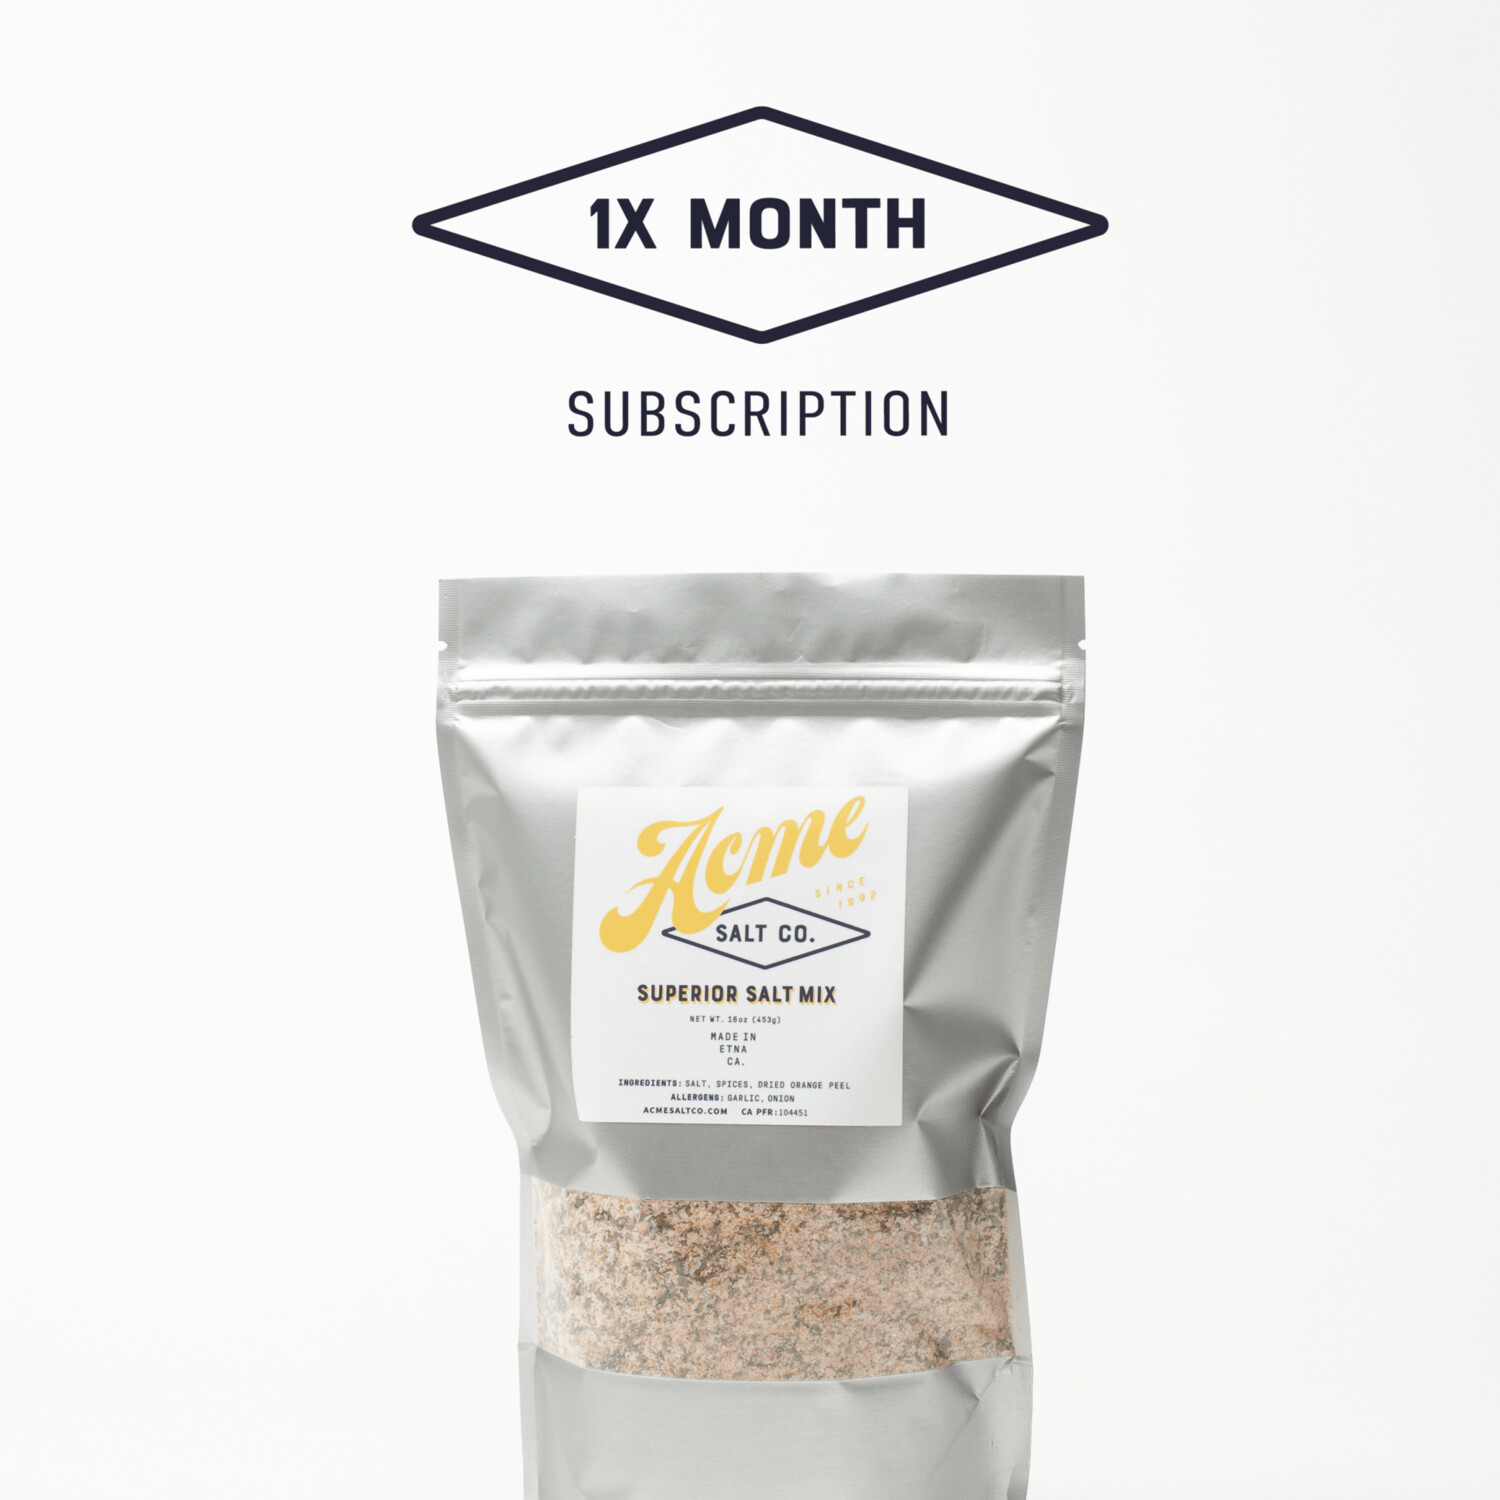 Superior Salt Mix Subscription - Once a Month